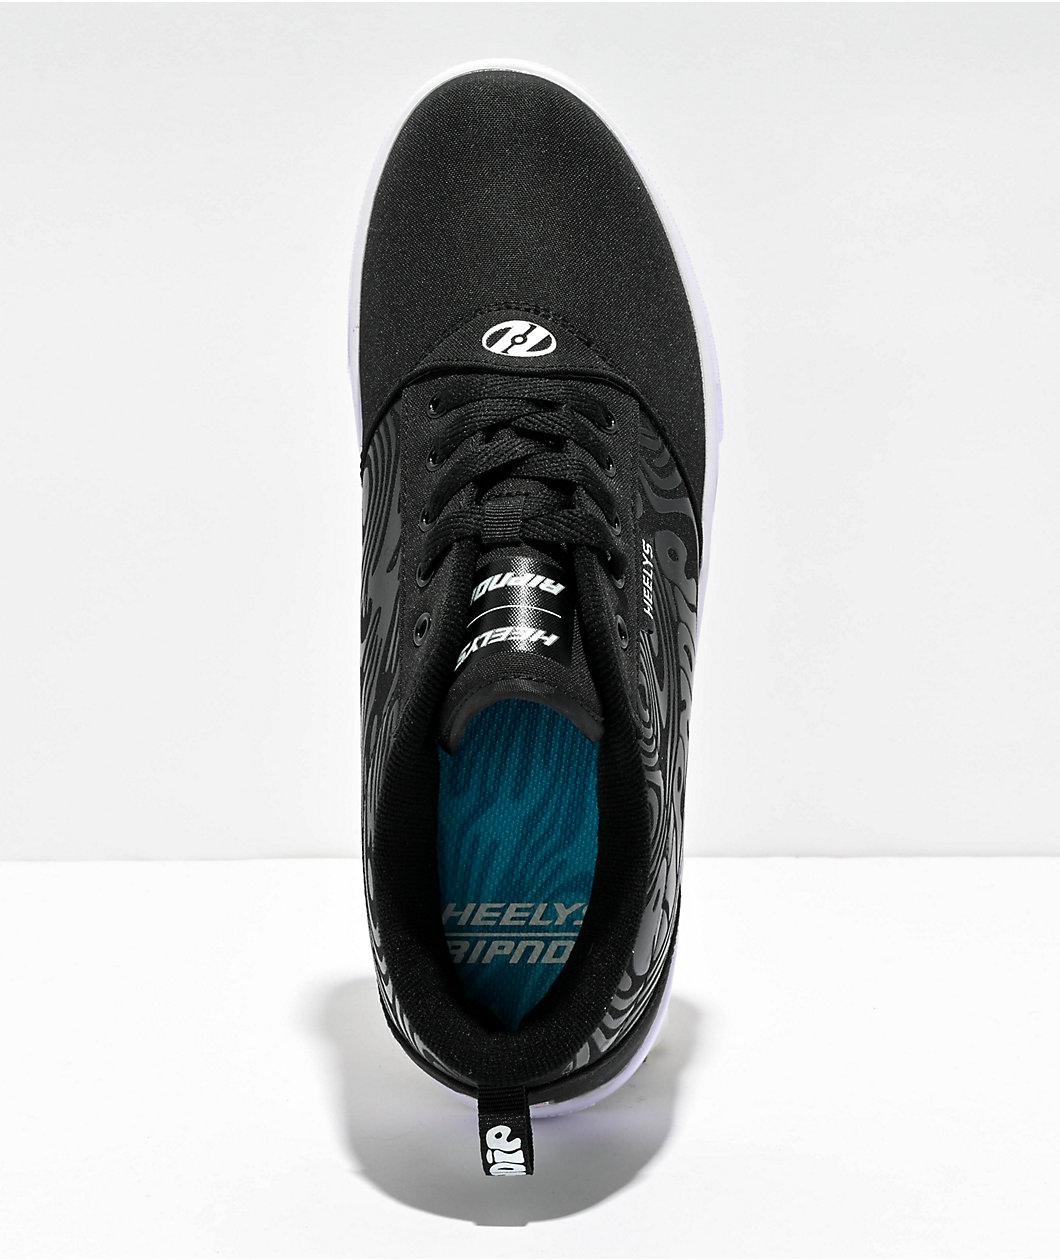 RIPNDIP Pro 20 Heelys Shoes (Black/White/Neon Green)